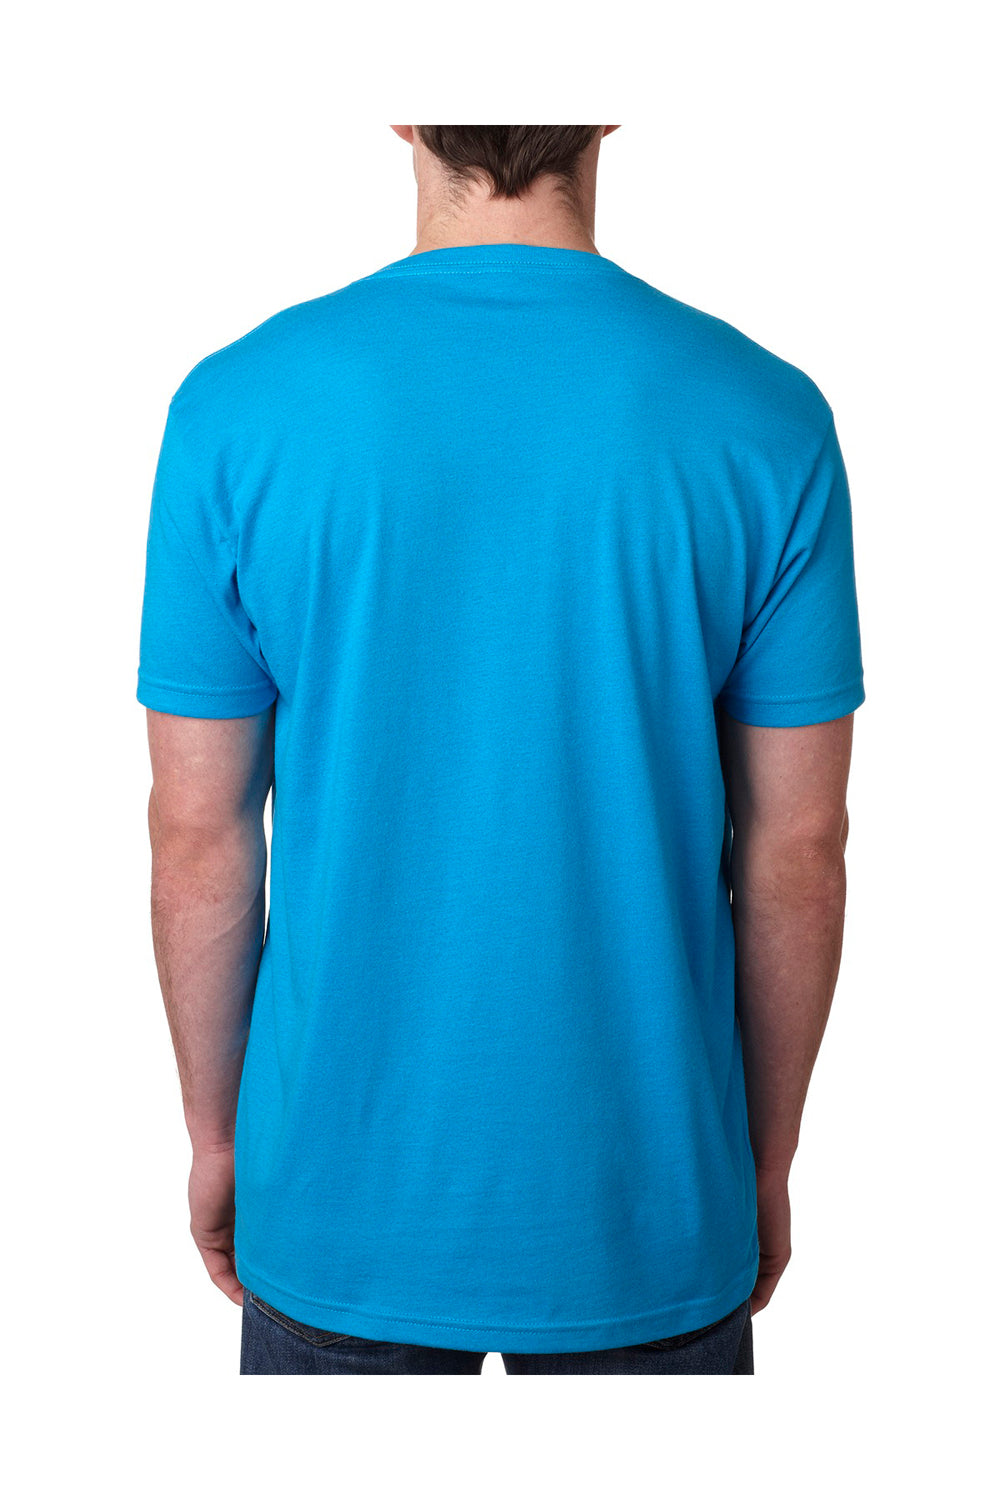 Next Level 6240 Mens CVC Jersey Short Sleeve V-Neck T-Shirt Turquoise Blue Back